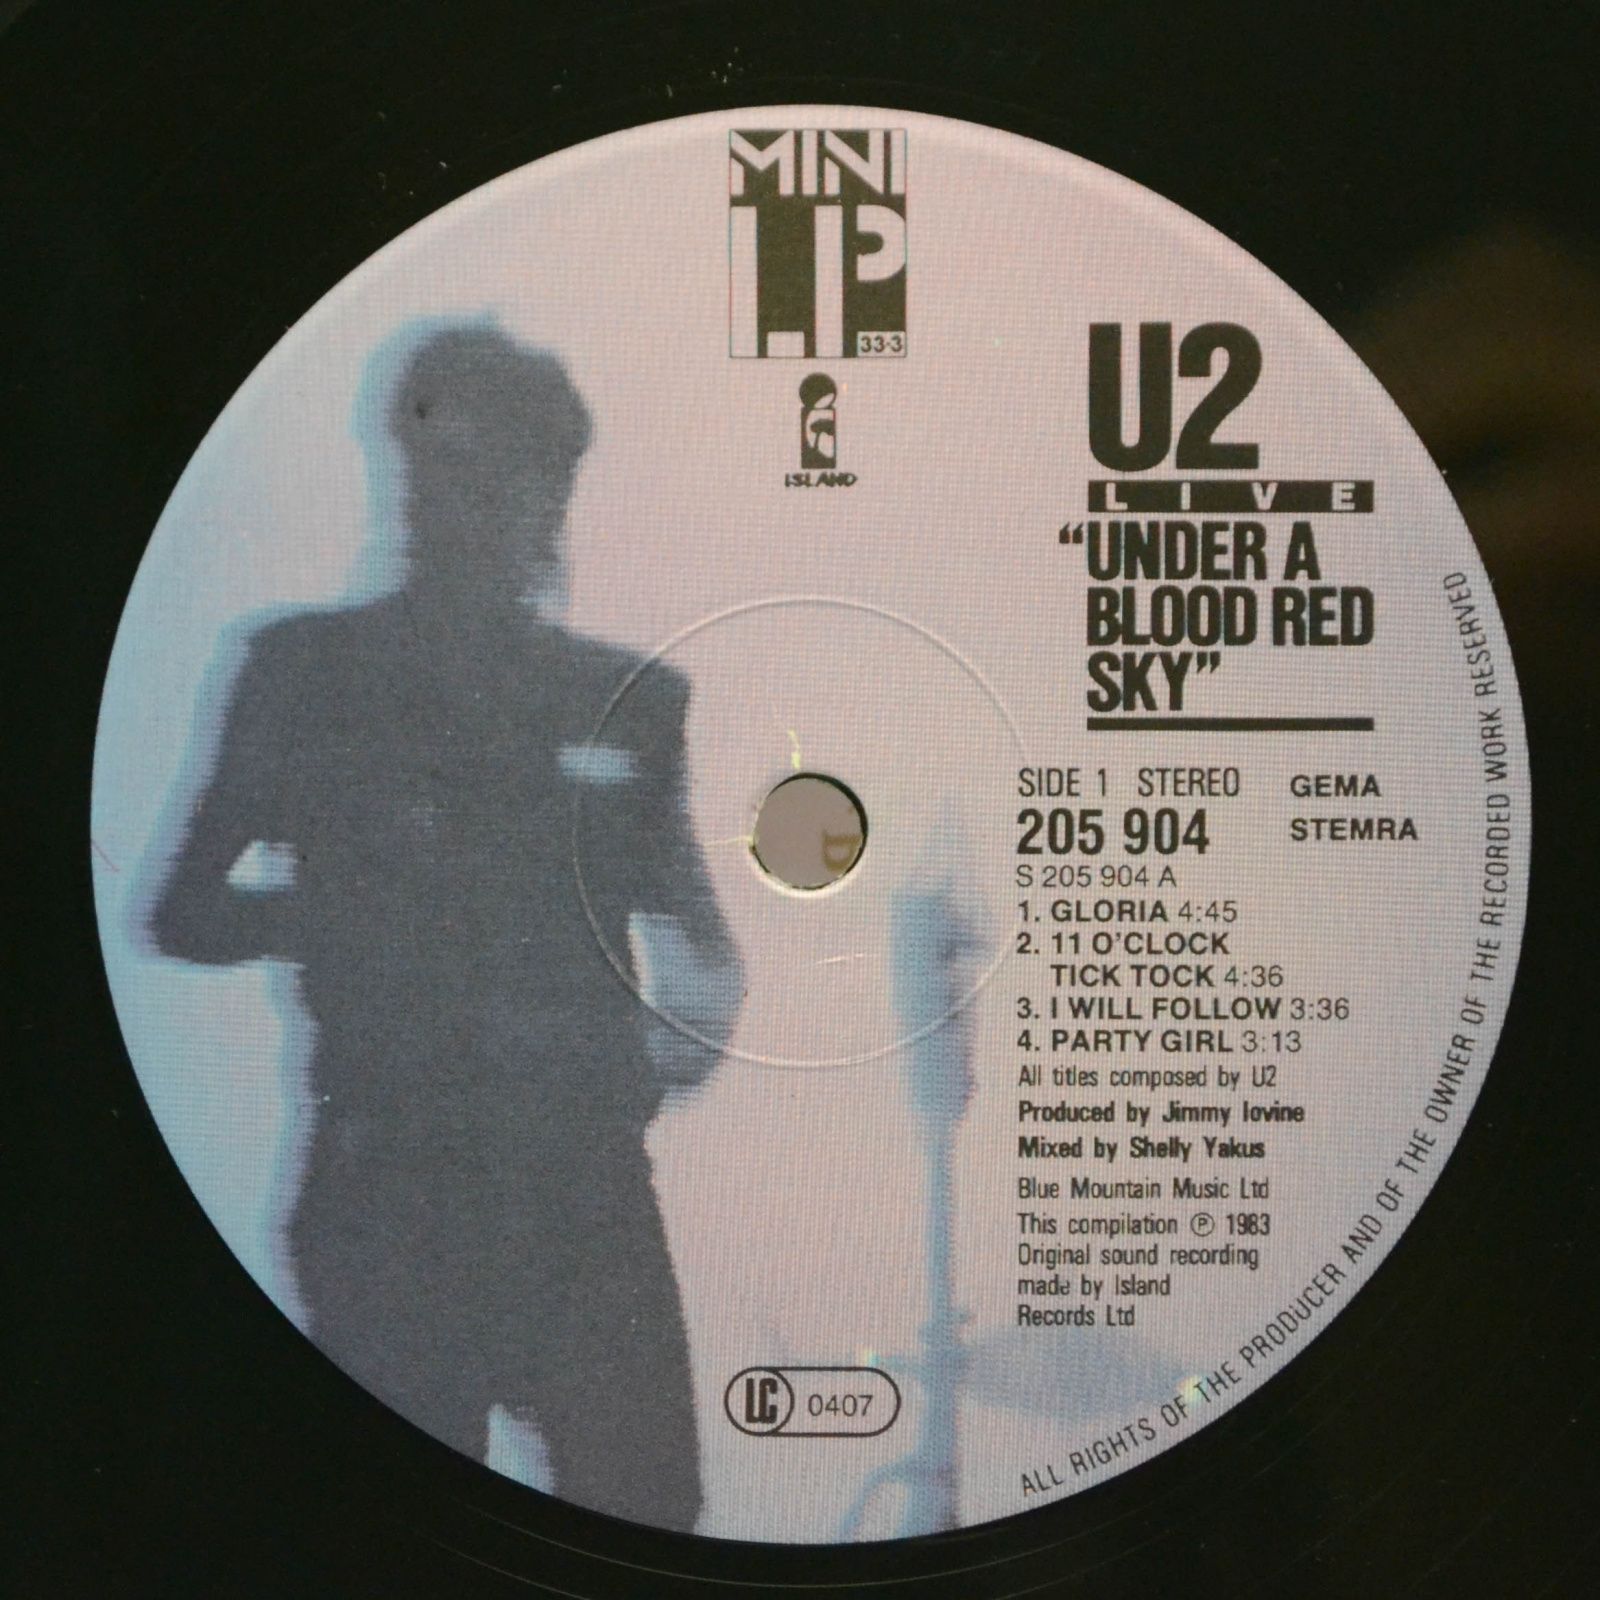 U2 — Under A Blood Red Sky (Live), 1983